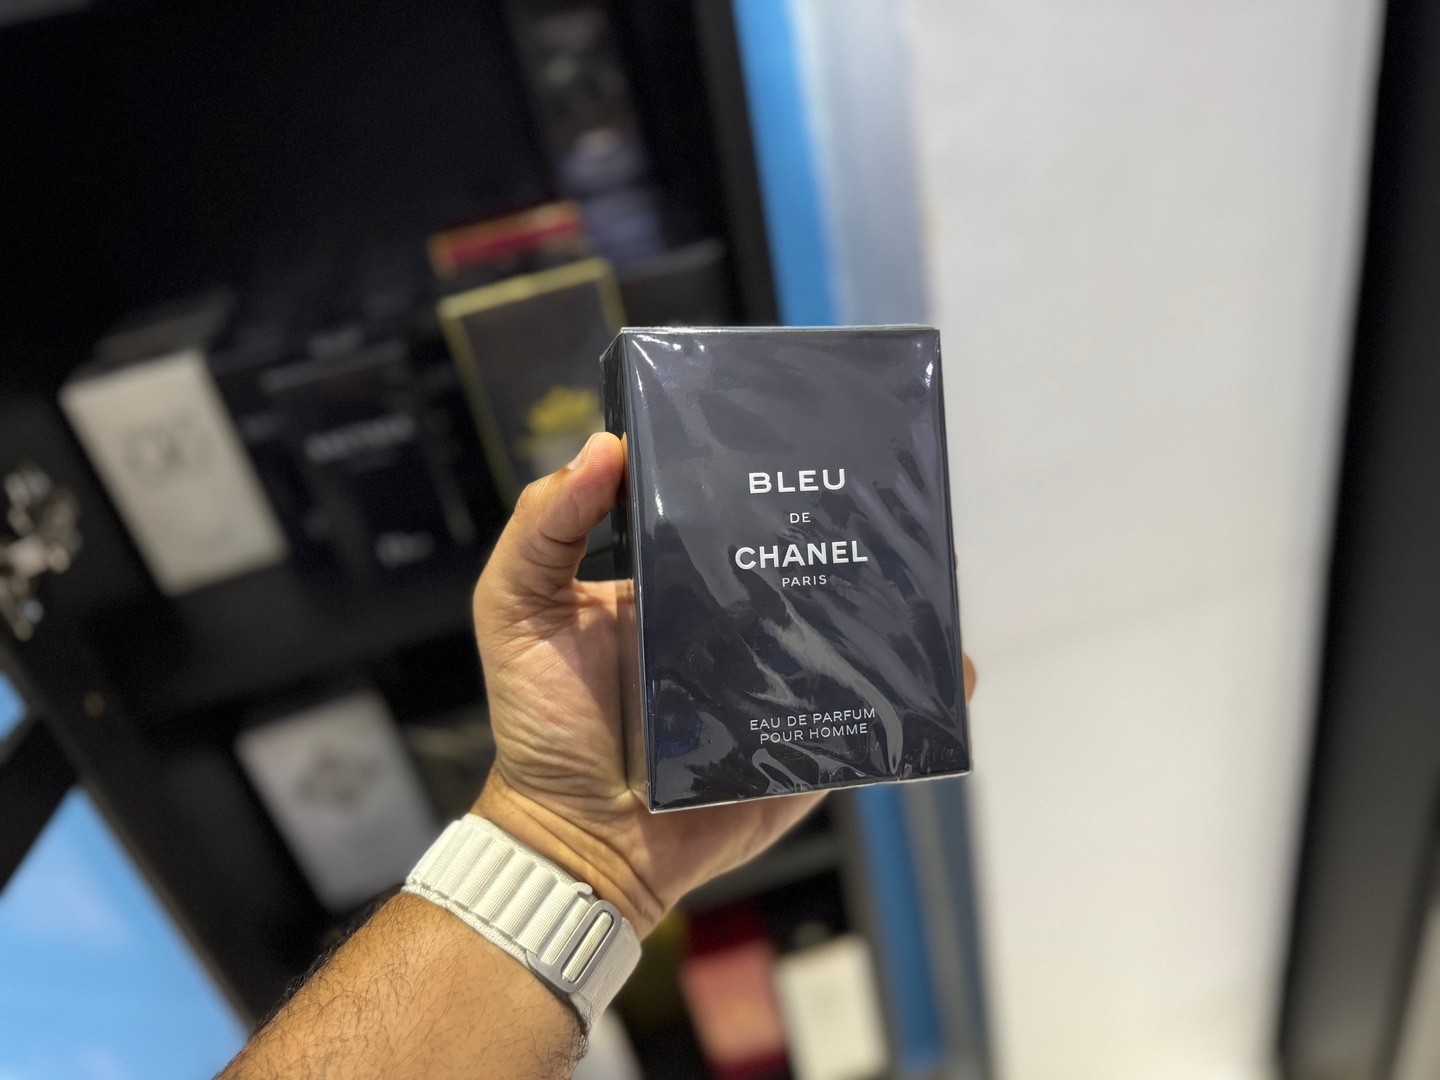 joyas, relojes y accesorios - Perfume Bleu de Chanel Paris EDP 100ML Nuevo, Original RD$ 8,995 NEG 0